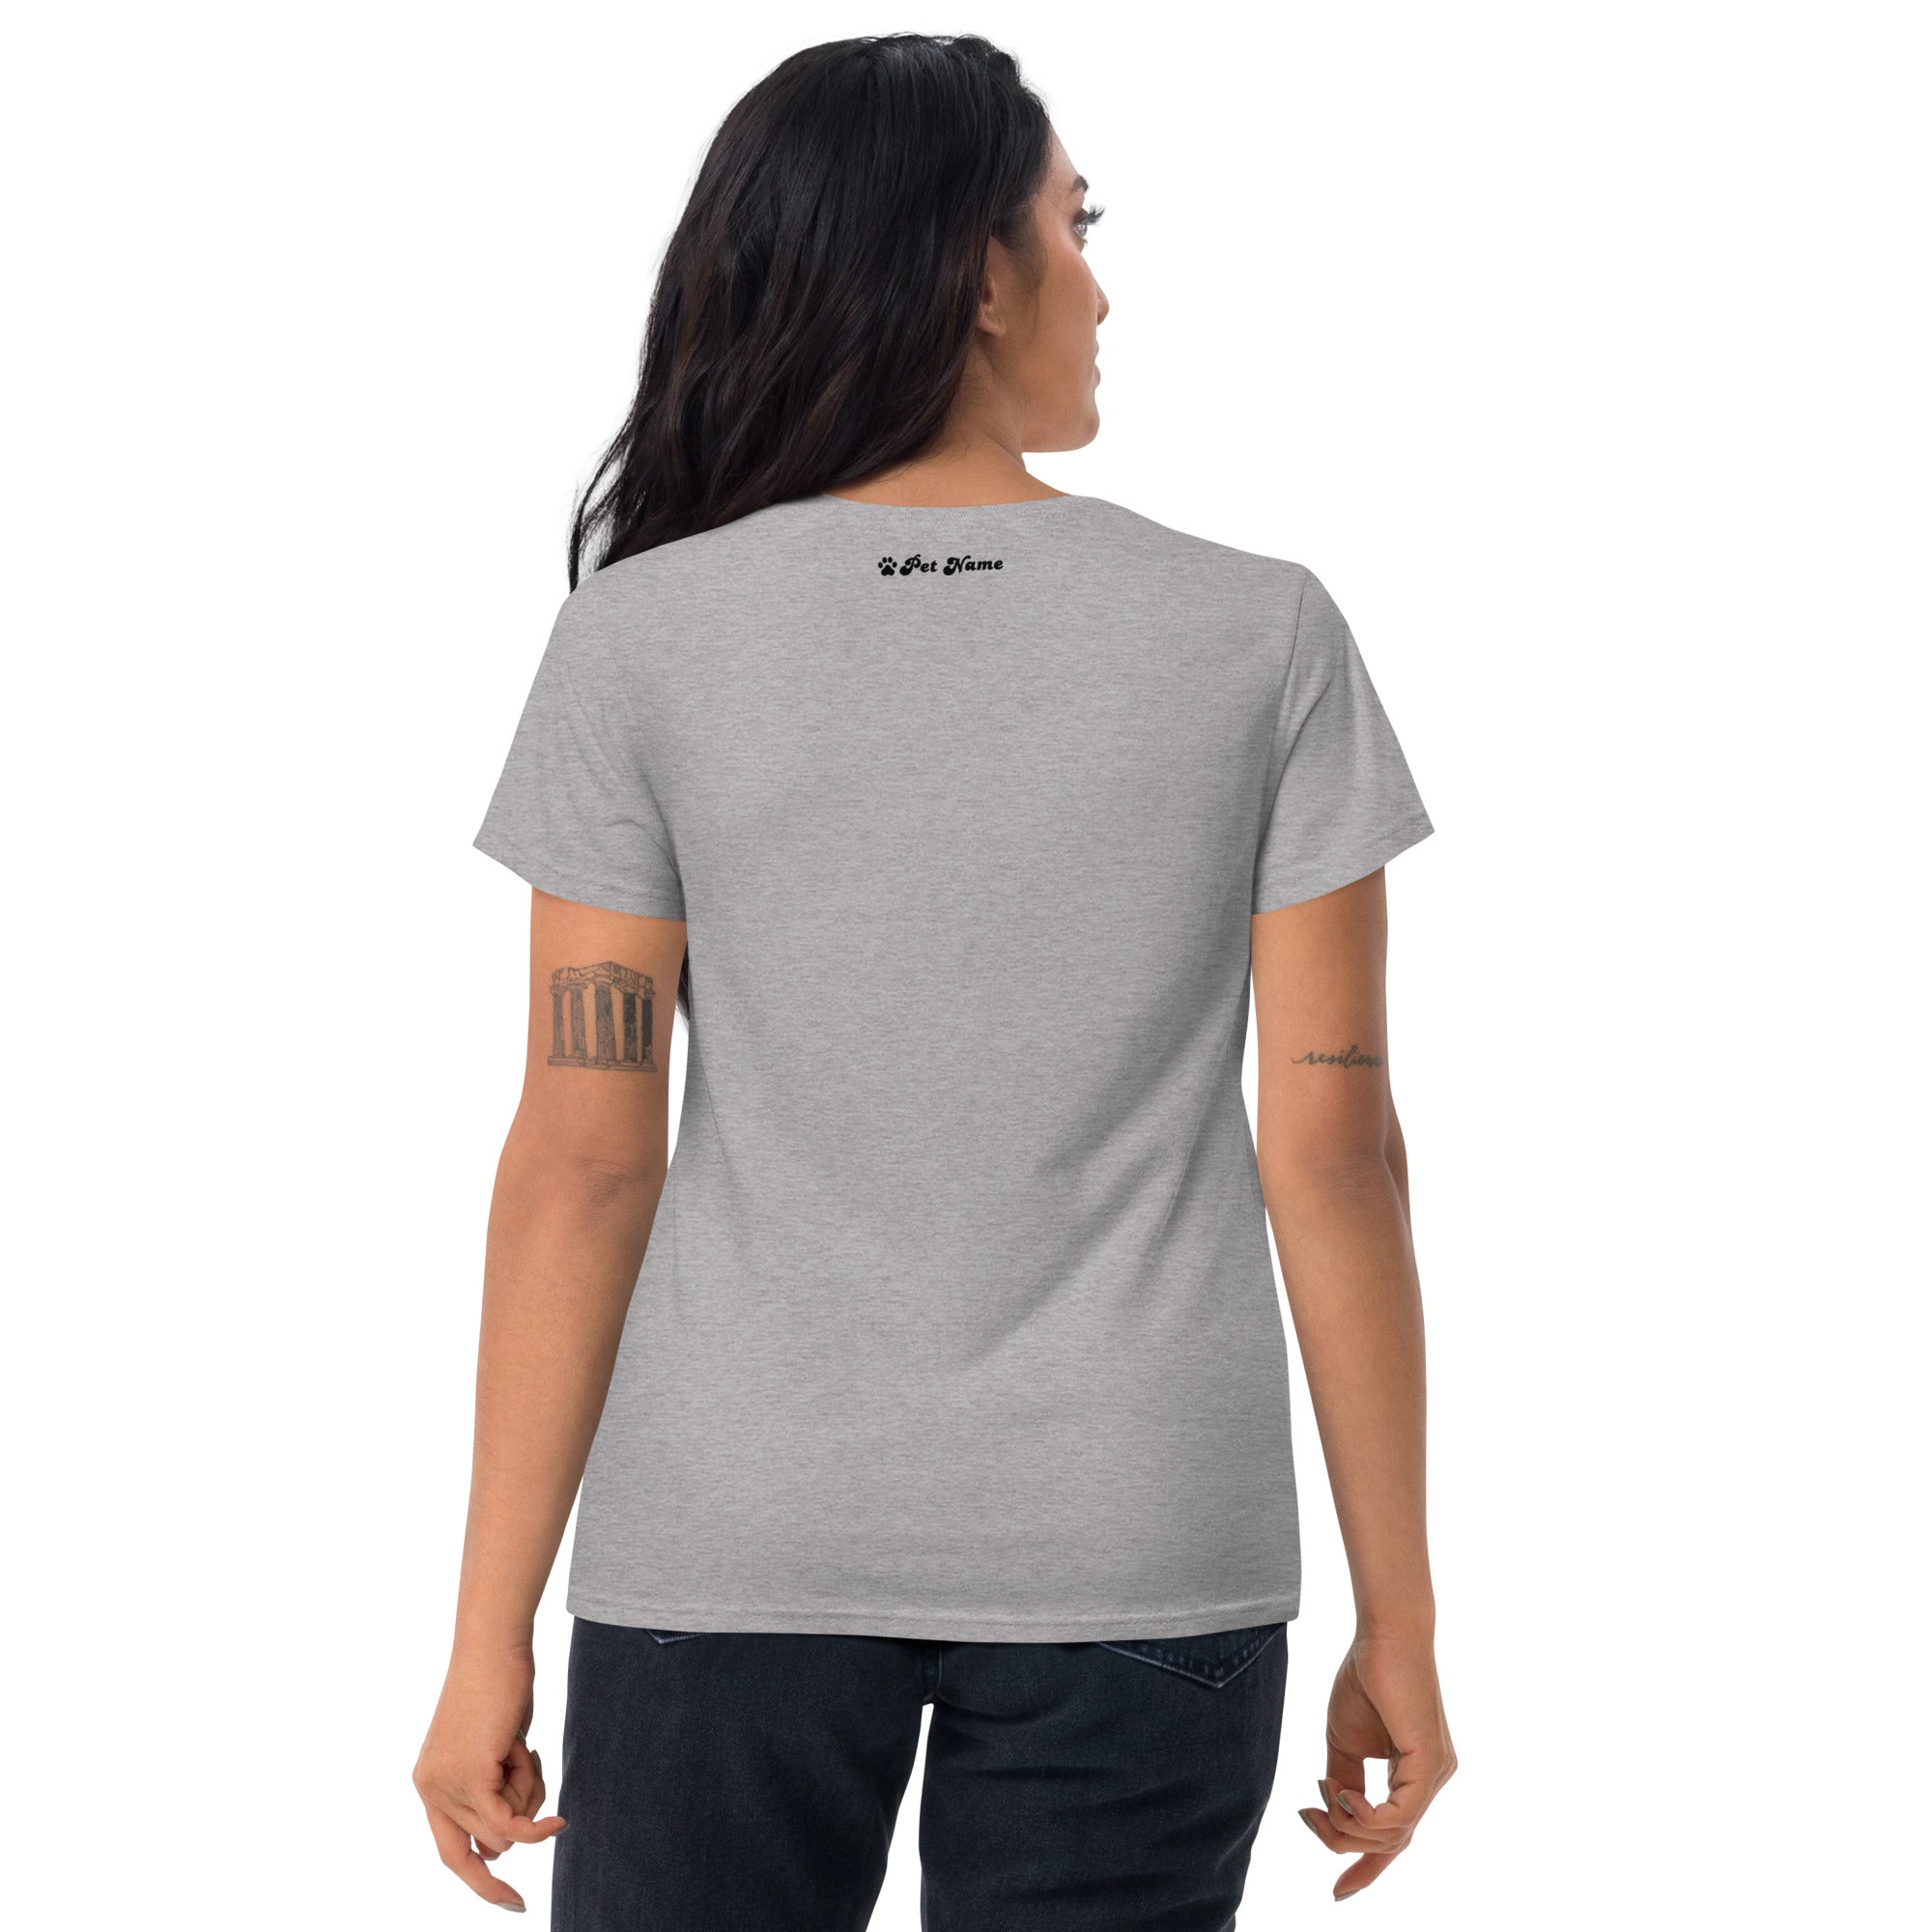 Dalmatian Women's short sleeve t-shirt